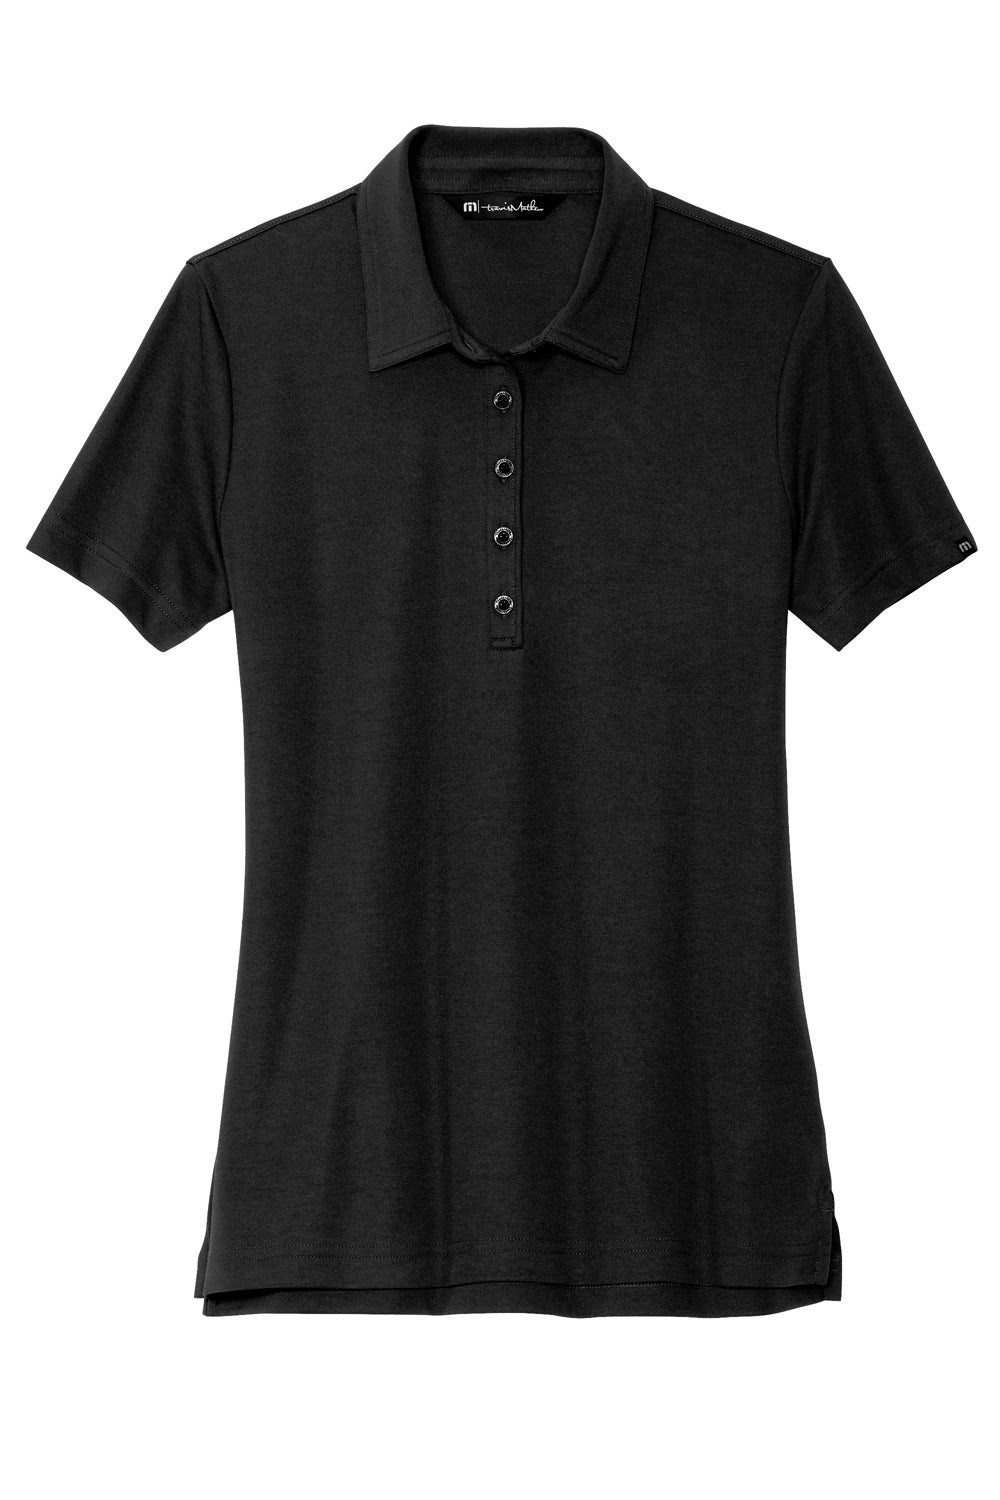 TravisMathew TM1WW001 Womens Oceanside Wrinkle Resistant Short Sleeve Polo Shirt Black Flat Front